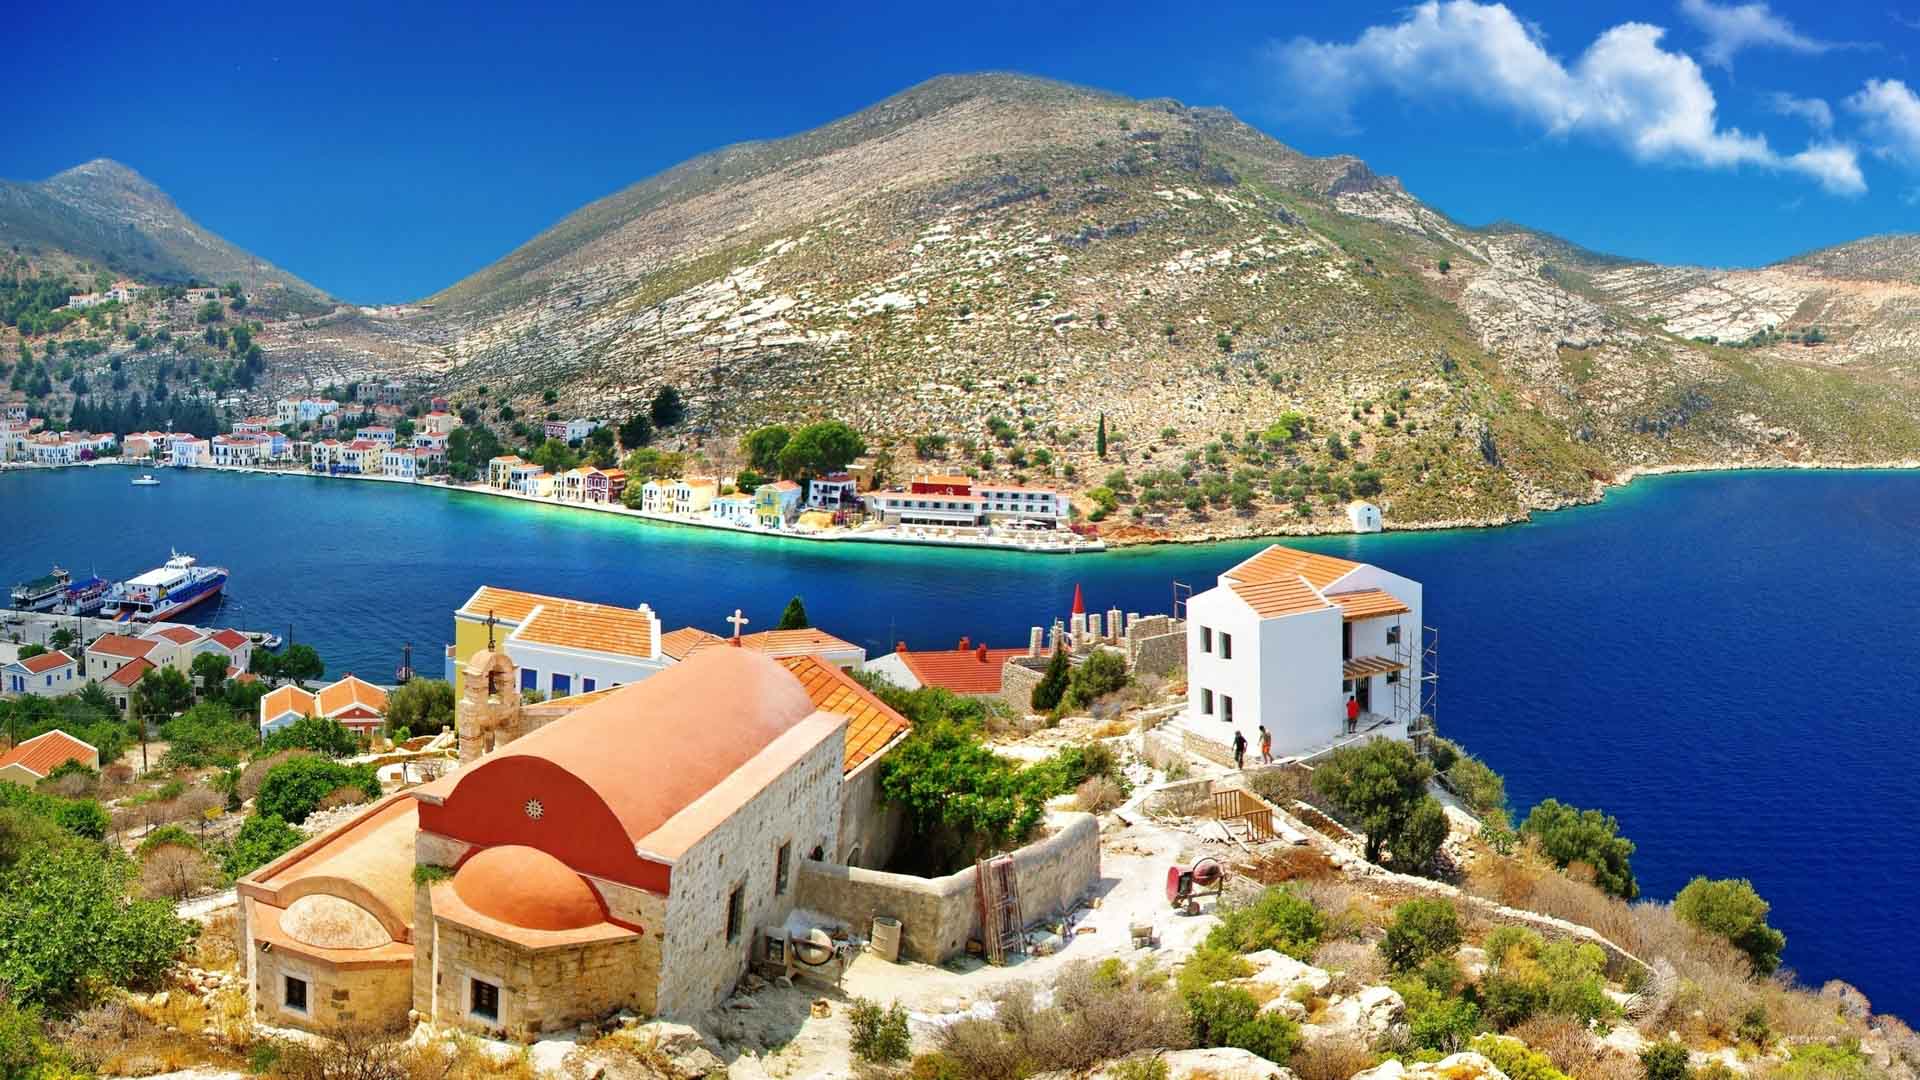 greece wallpaper hd,natural landscape,tourism,town,bay,mountain village